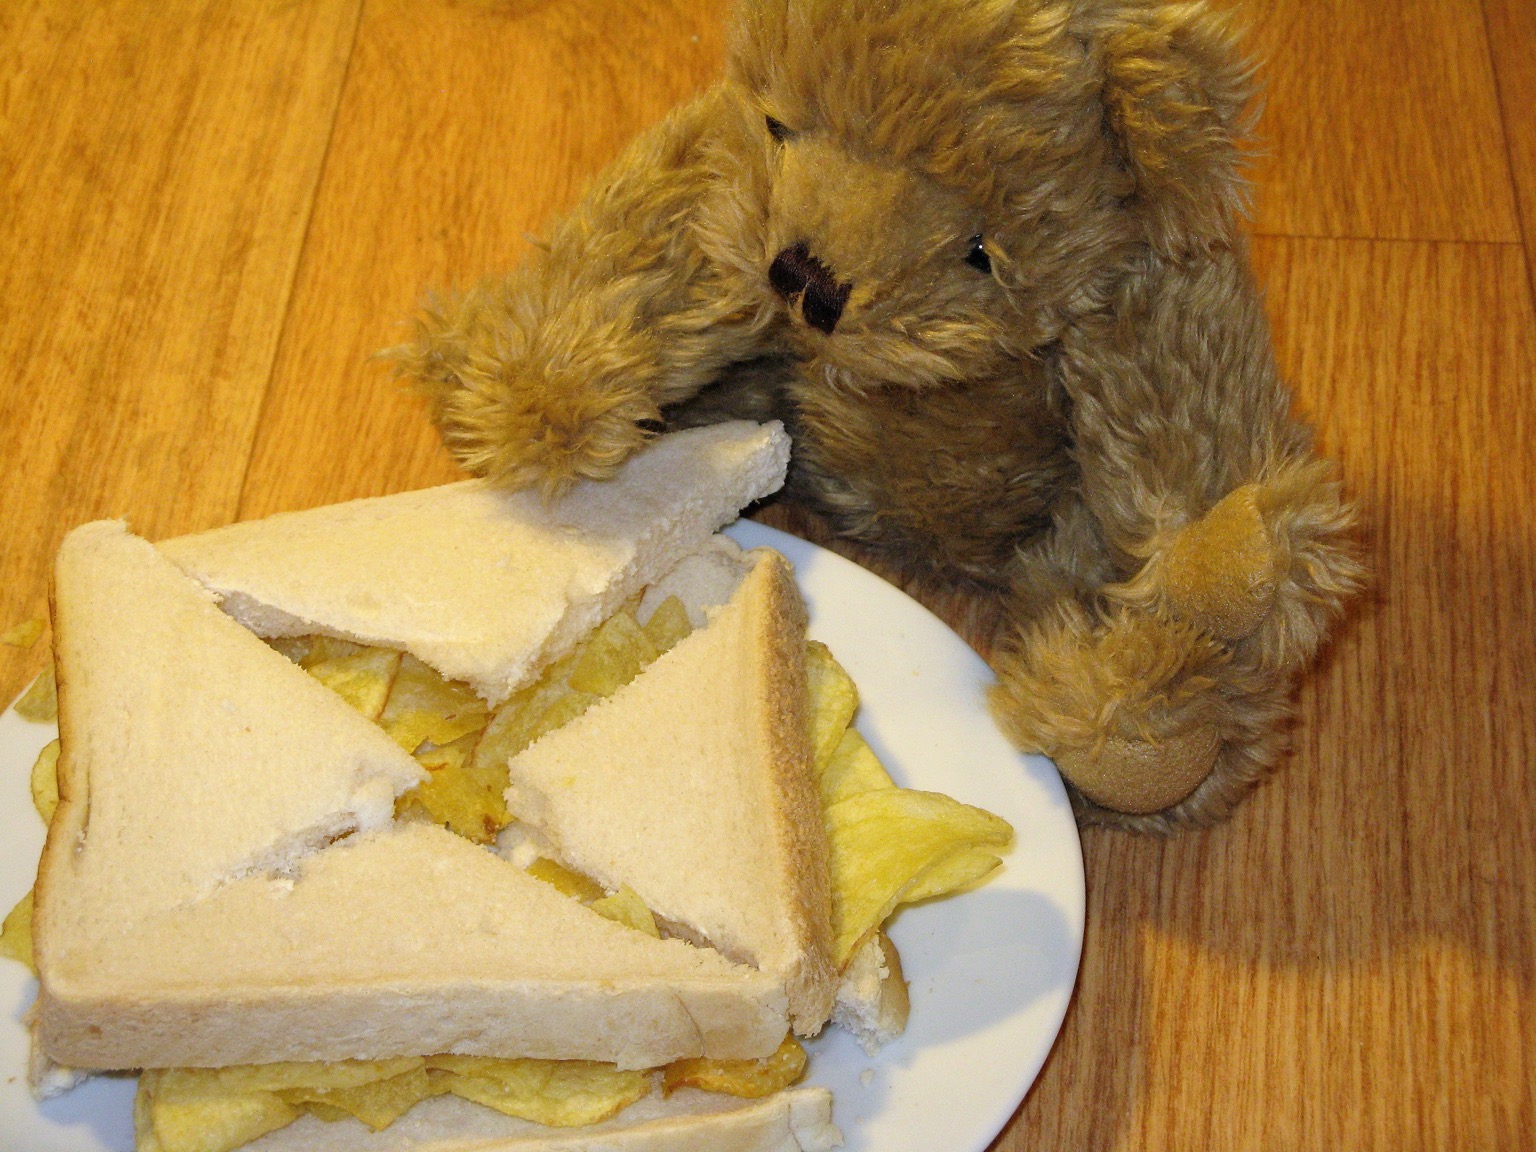 Quartered crisp sandwich with a teddy bear